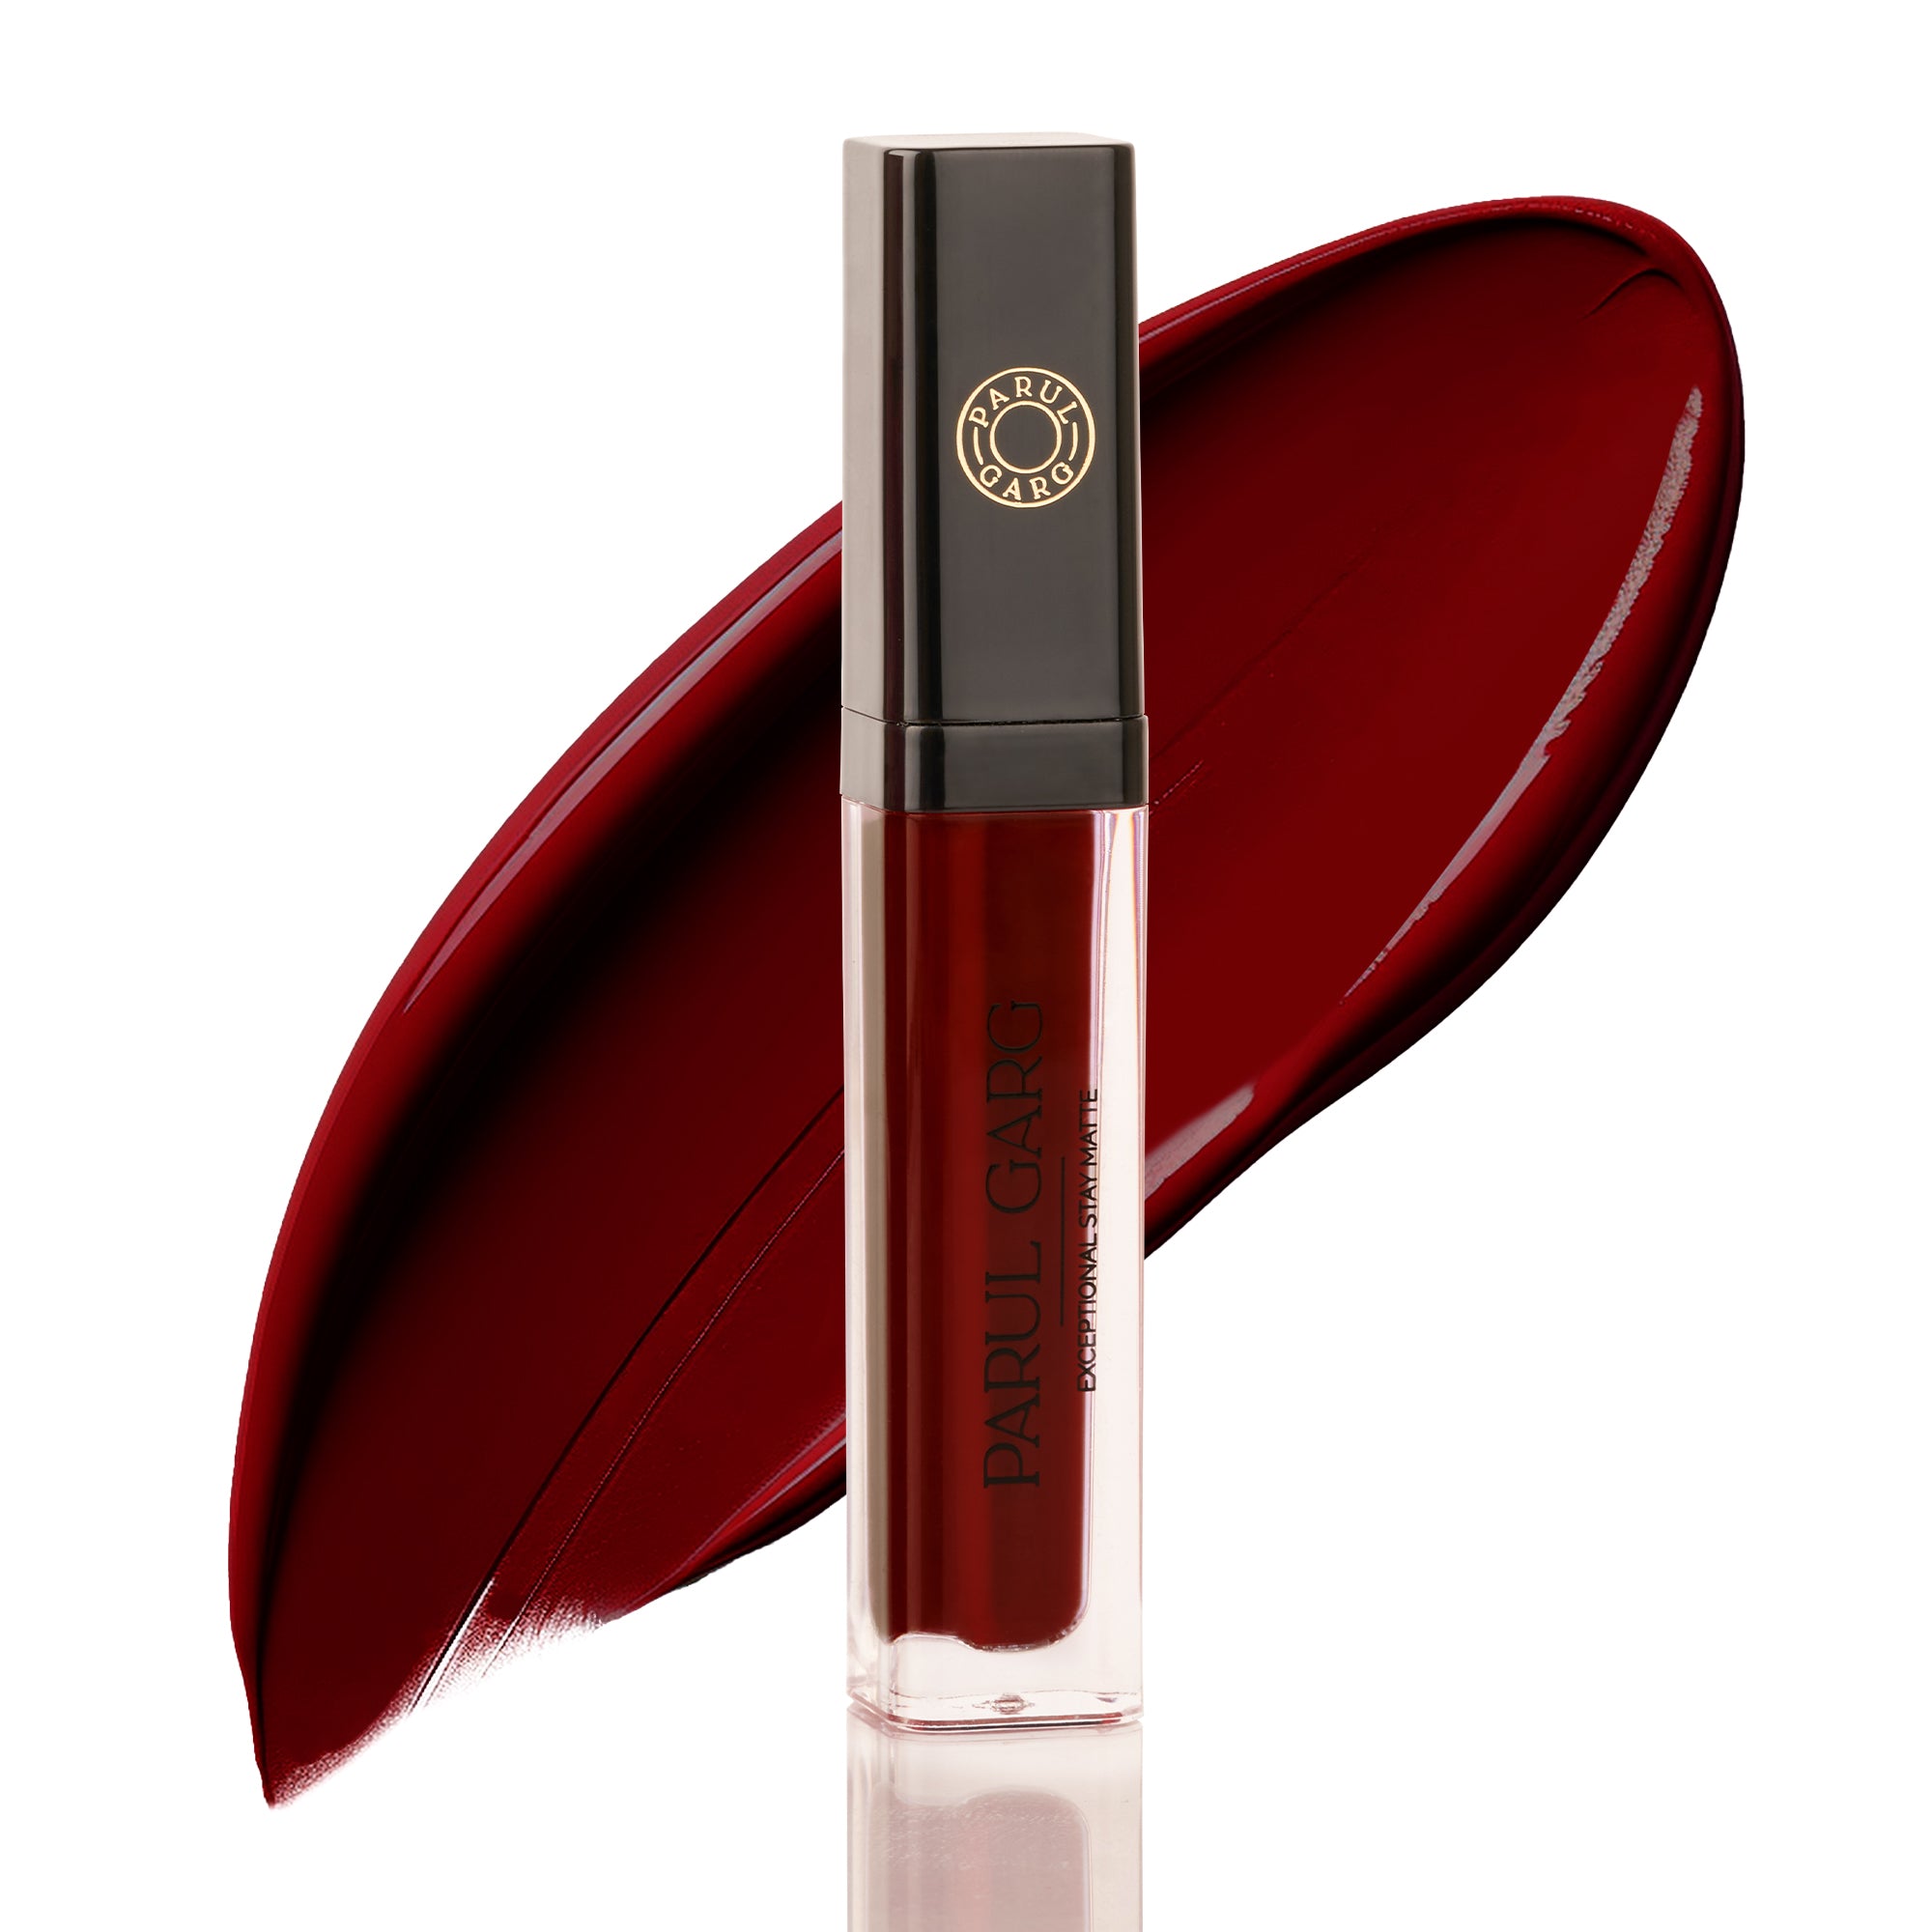 Exceptional Stay Matte Liquid Lipstick Shade: Primrose 05